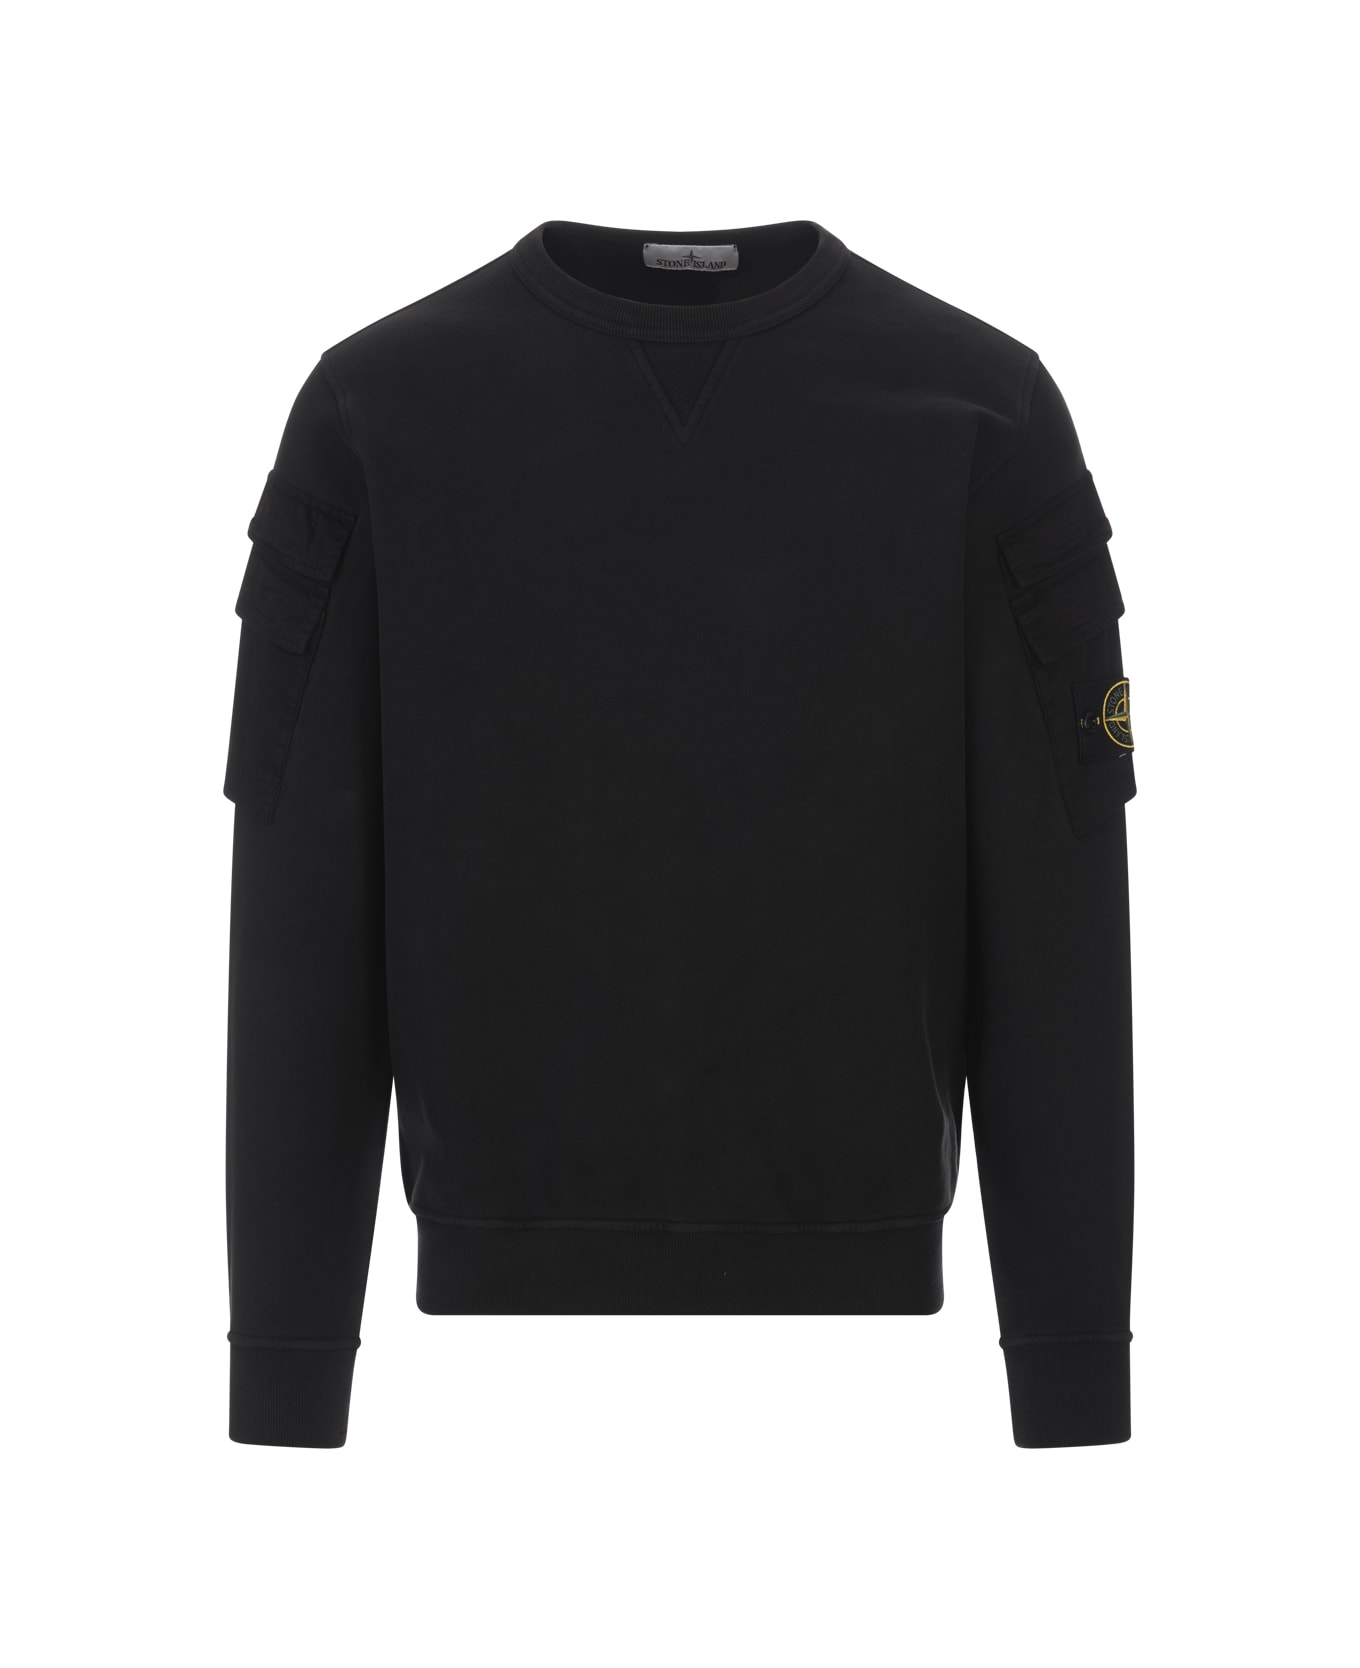 Stone Island Crewneck Sweatshirt With Pockets - Black